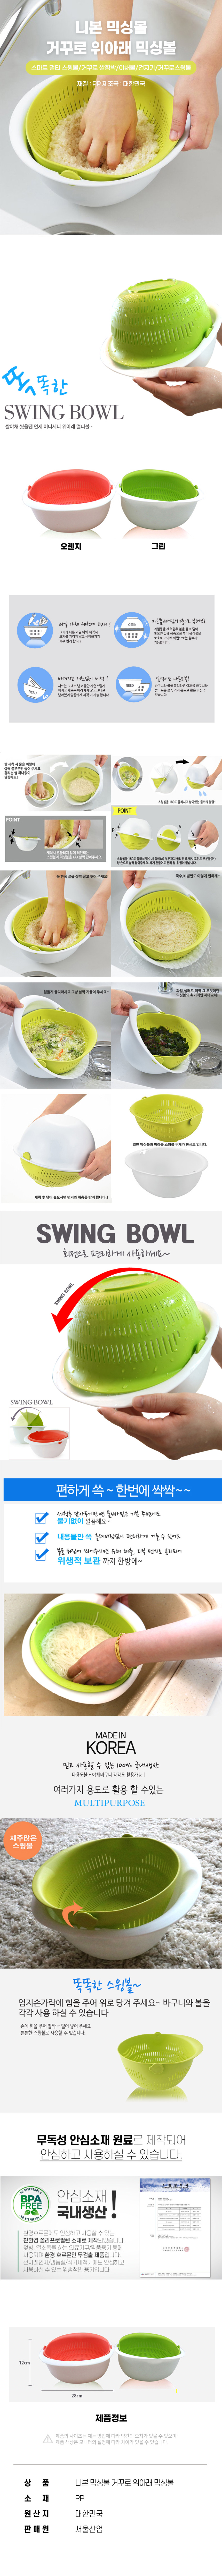 swingbowl.jpg